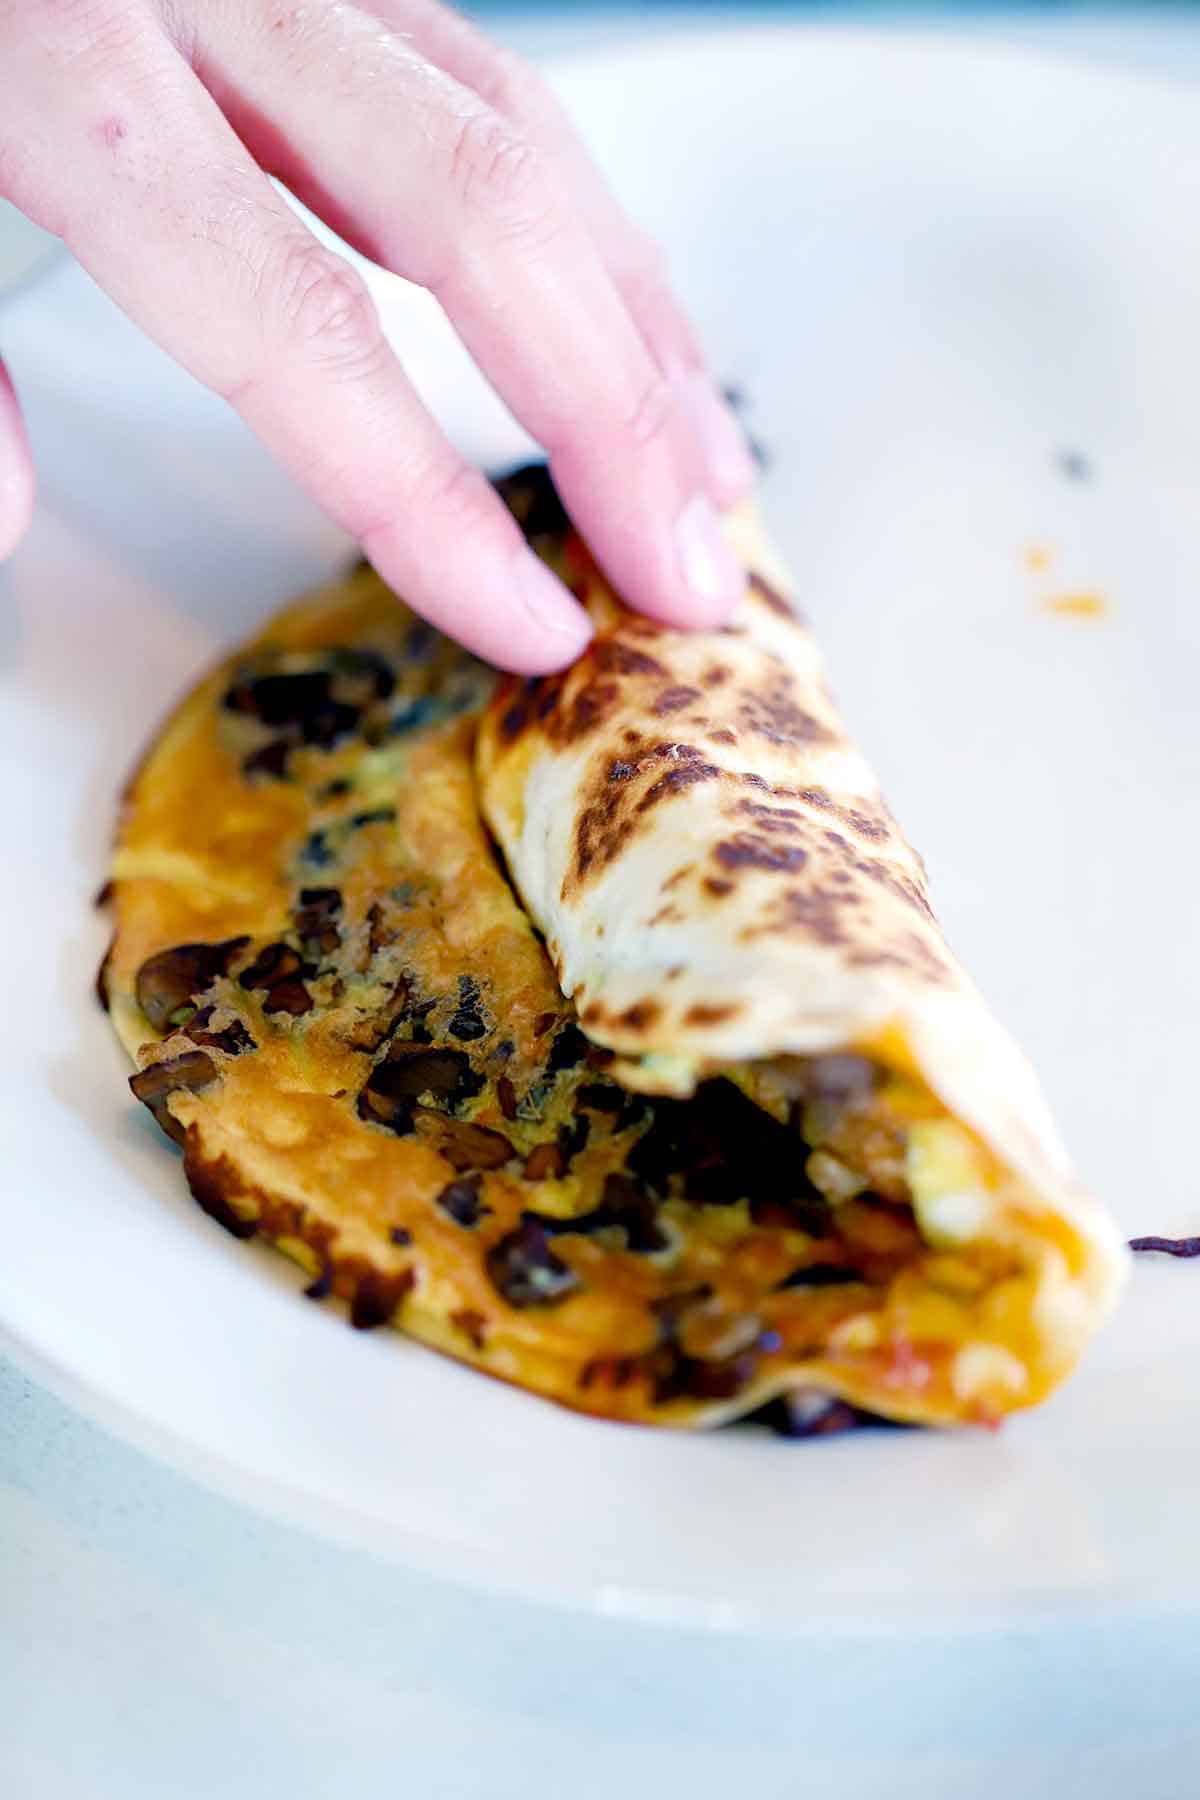 Rolling up a tortilla egg wrap.